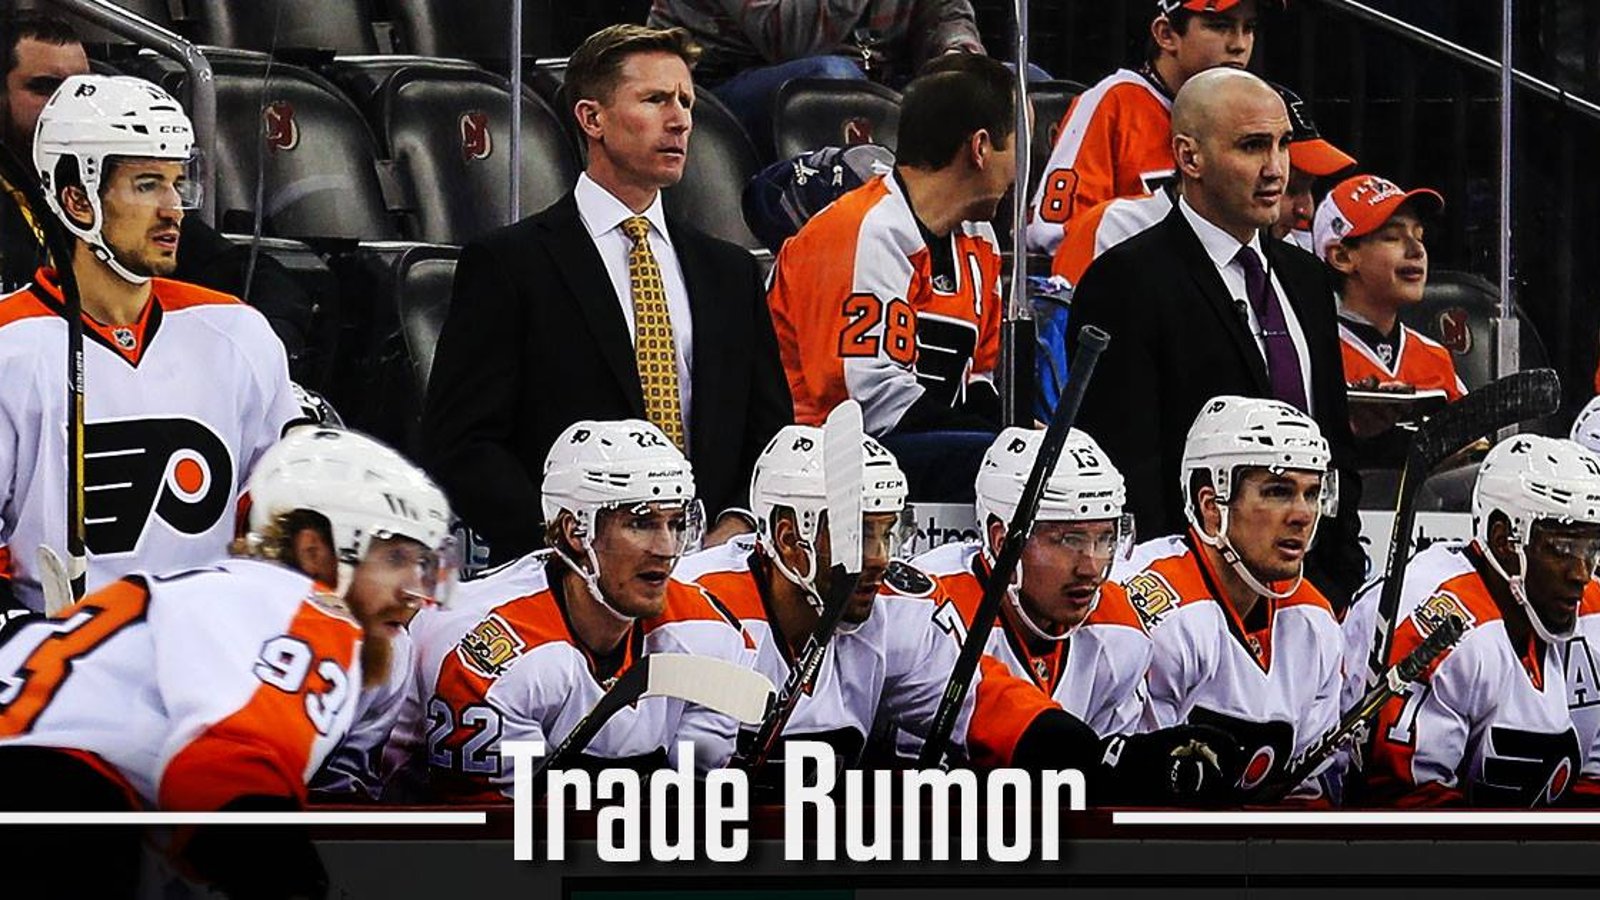 Breaking: One of Philadelphia's top forwards has just left the ice, big trade rumors.